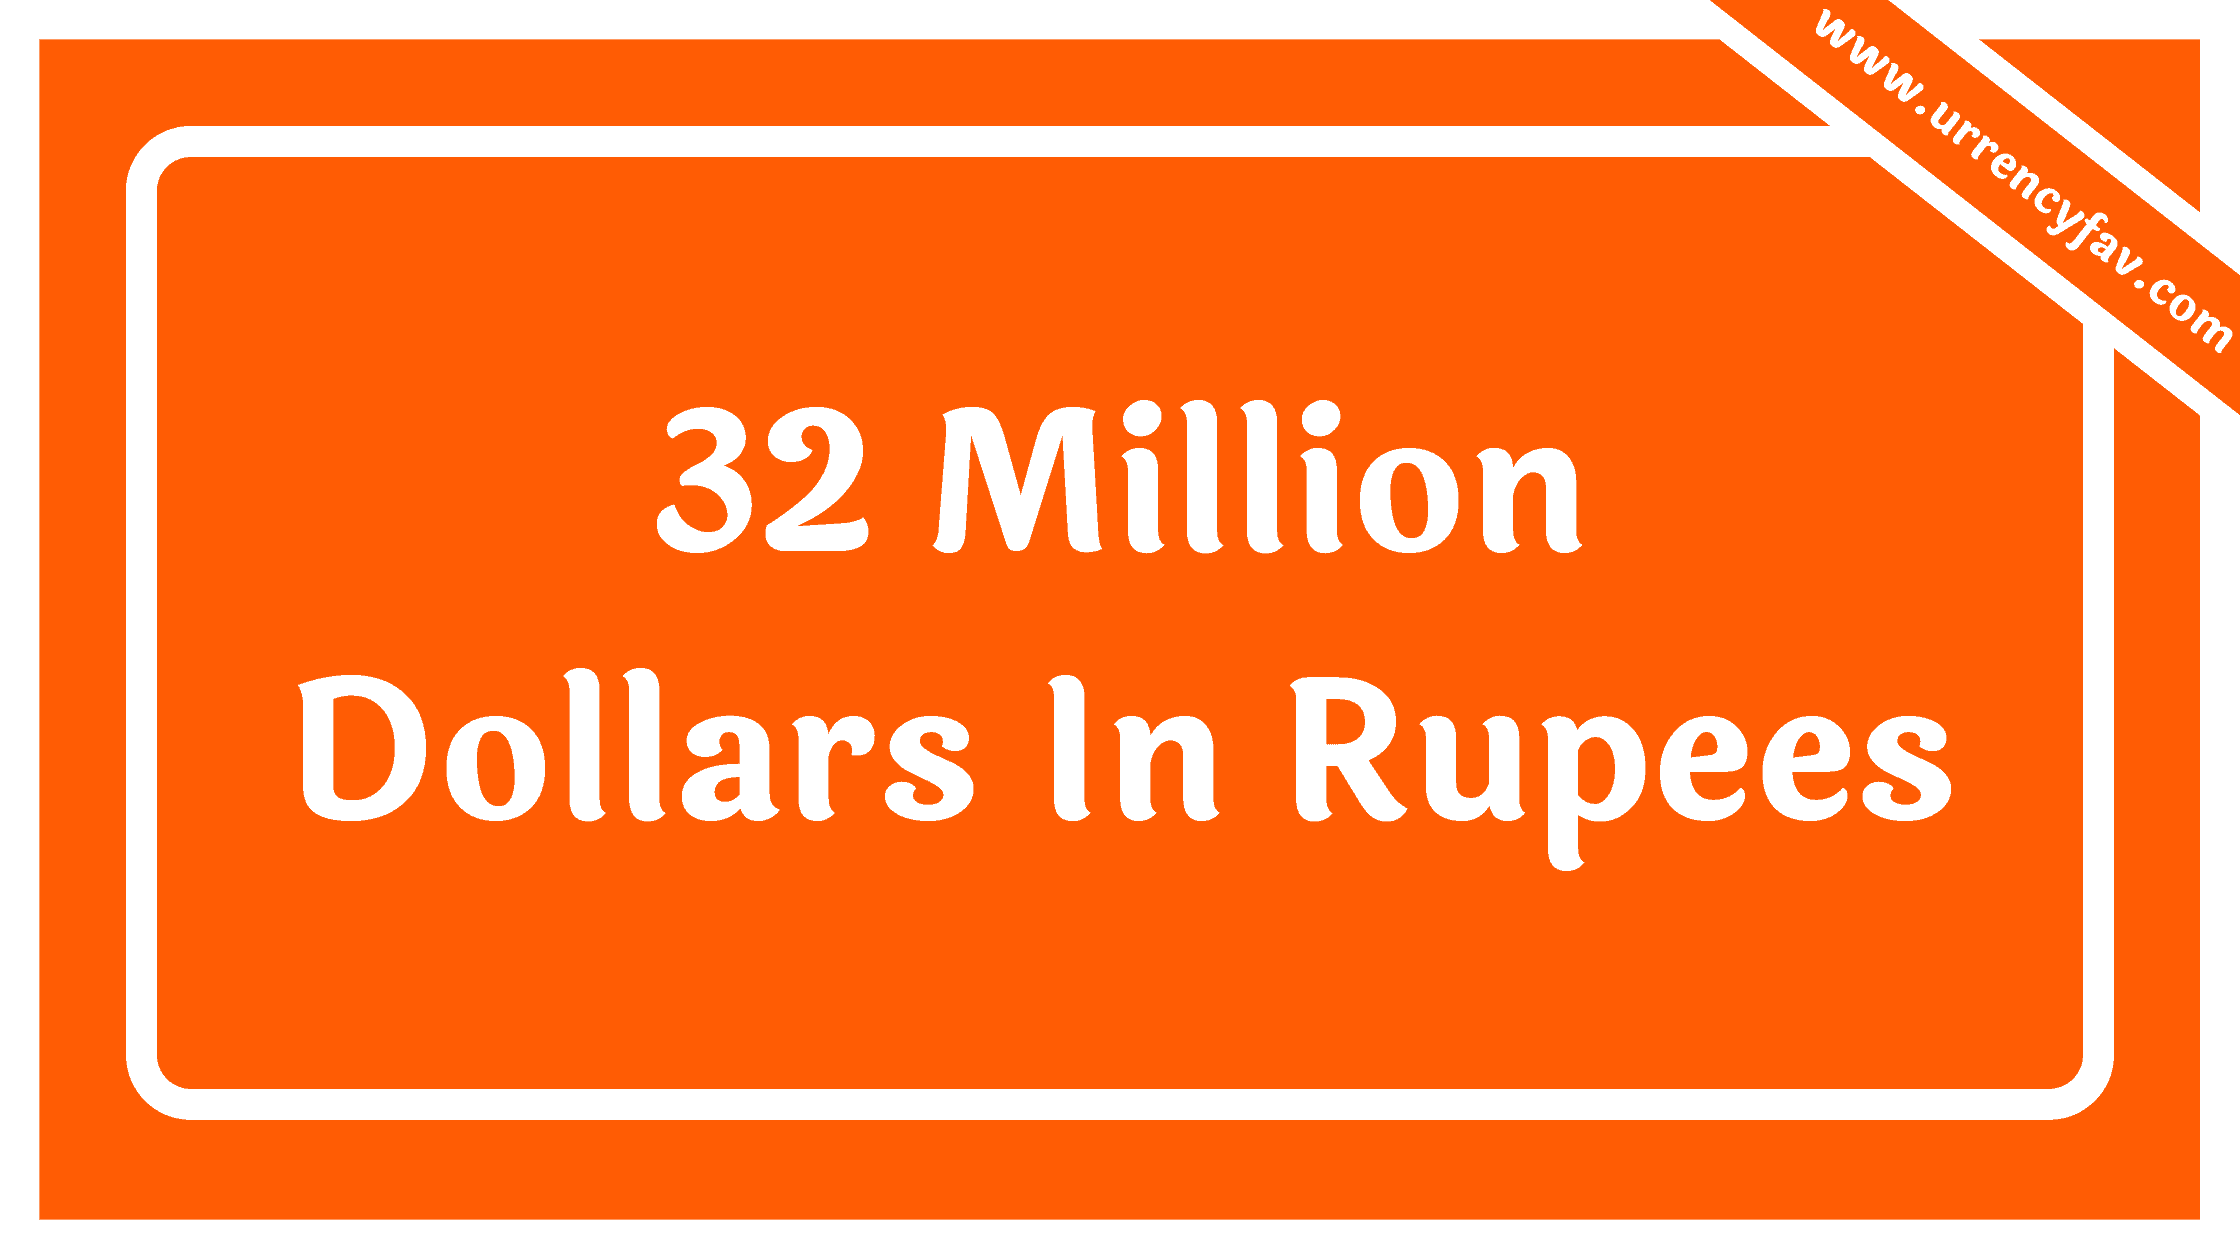 32 Million Dollars In Rupees